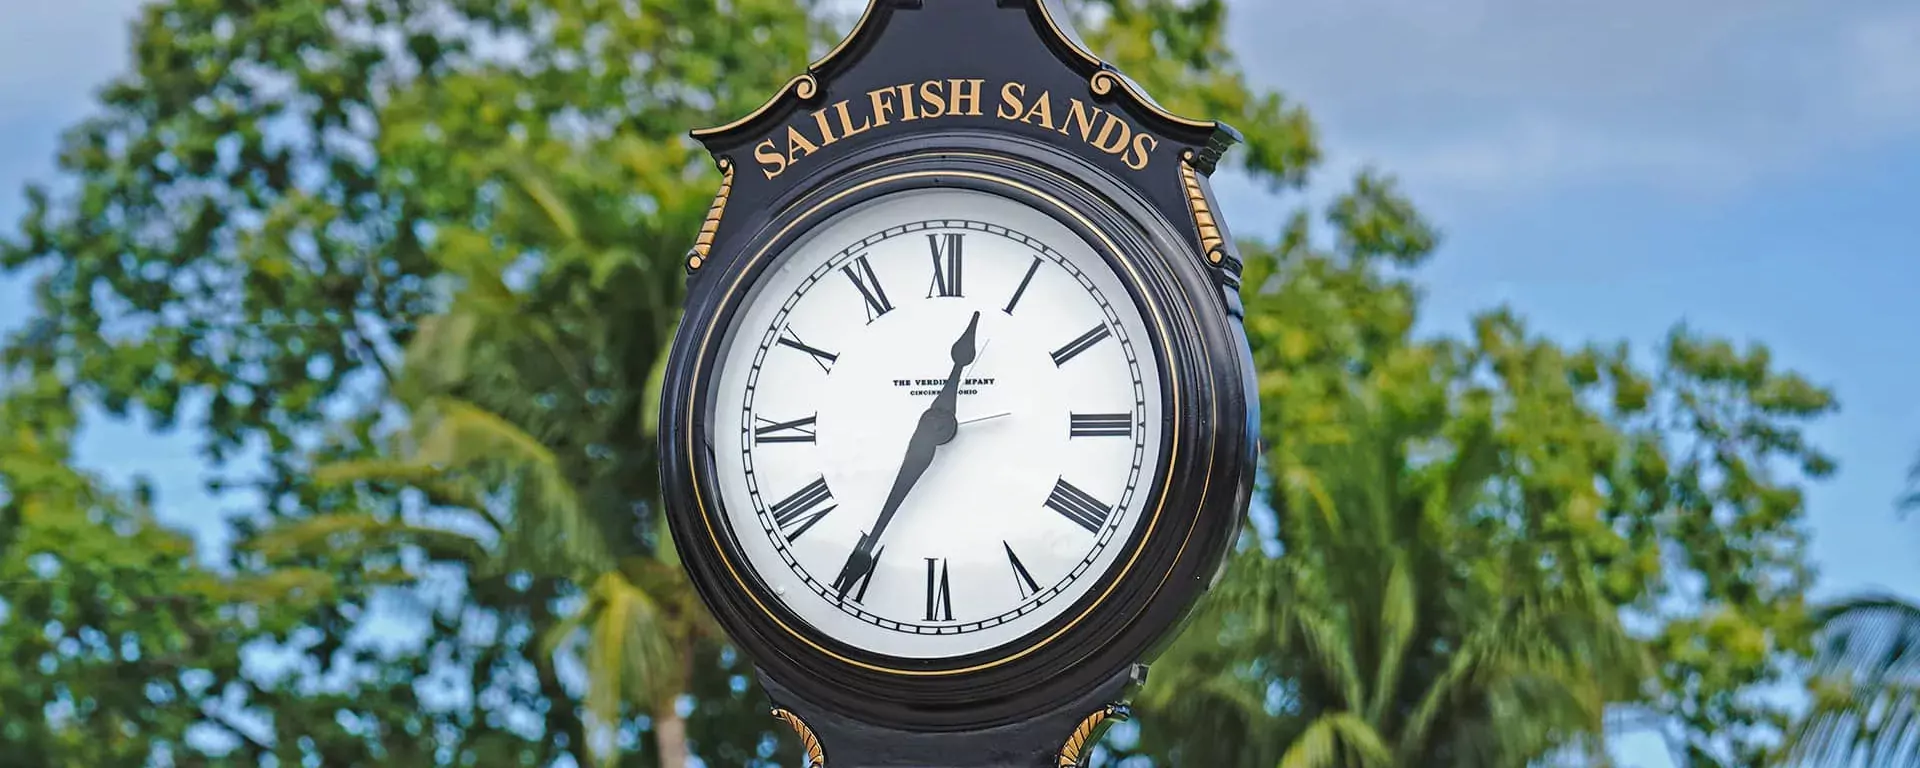 Image of a clock at Sailfish Sands Golf Course